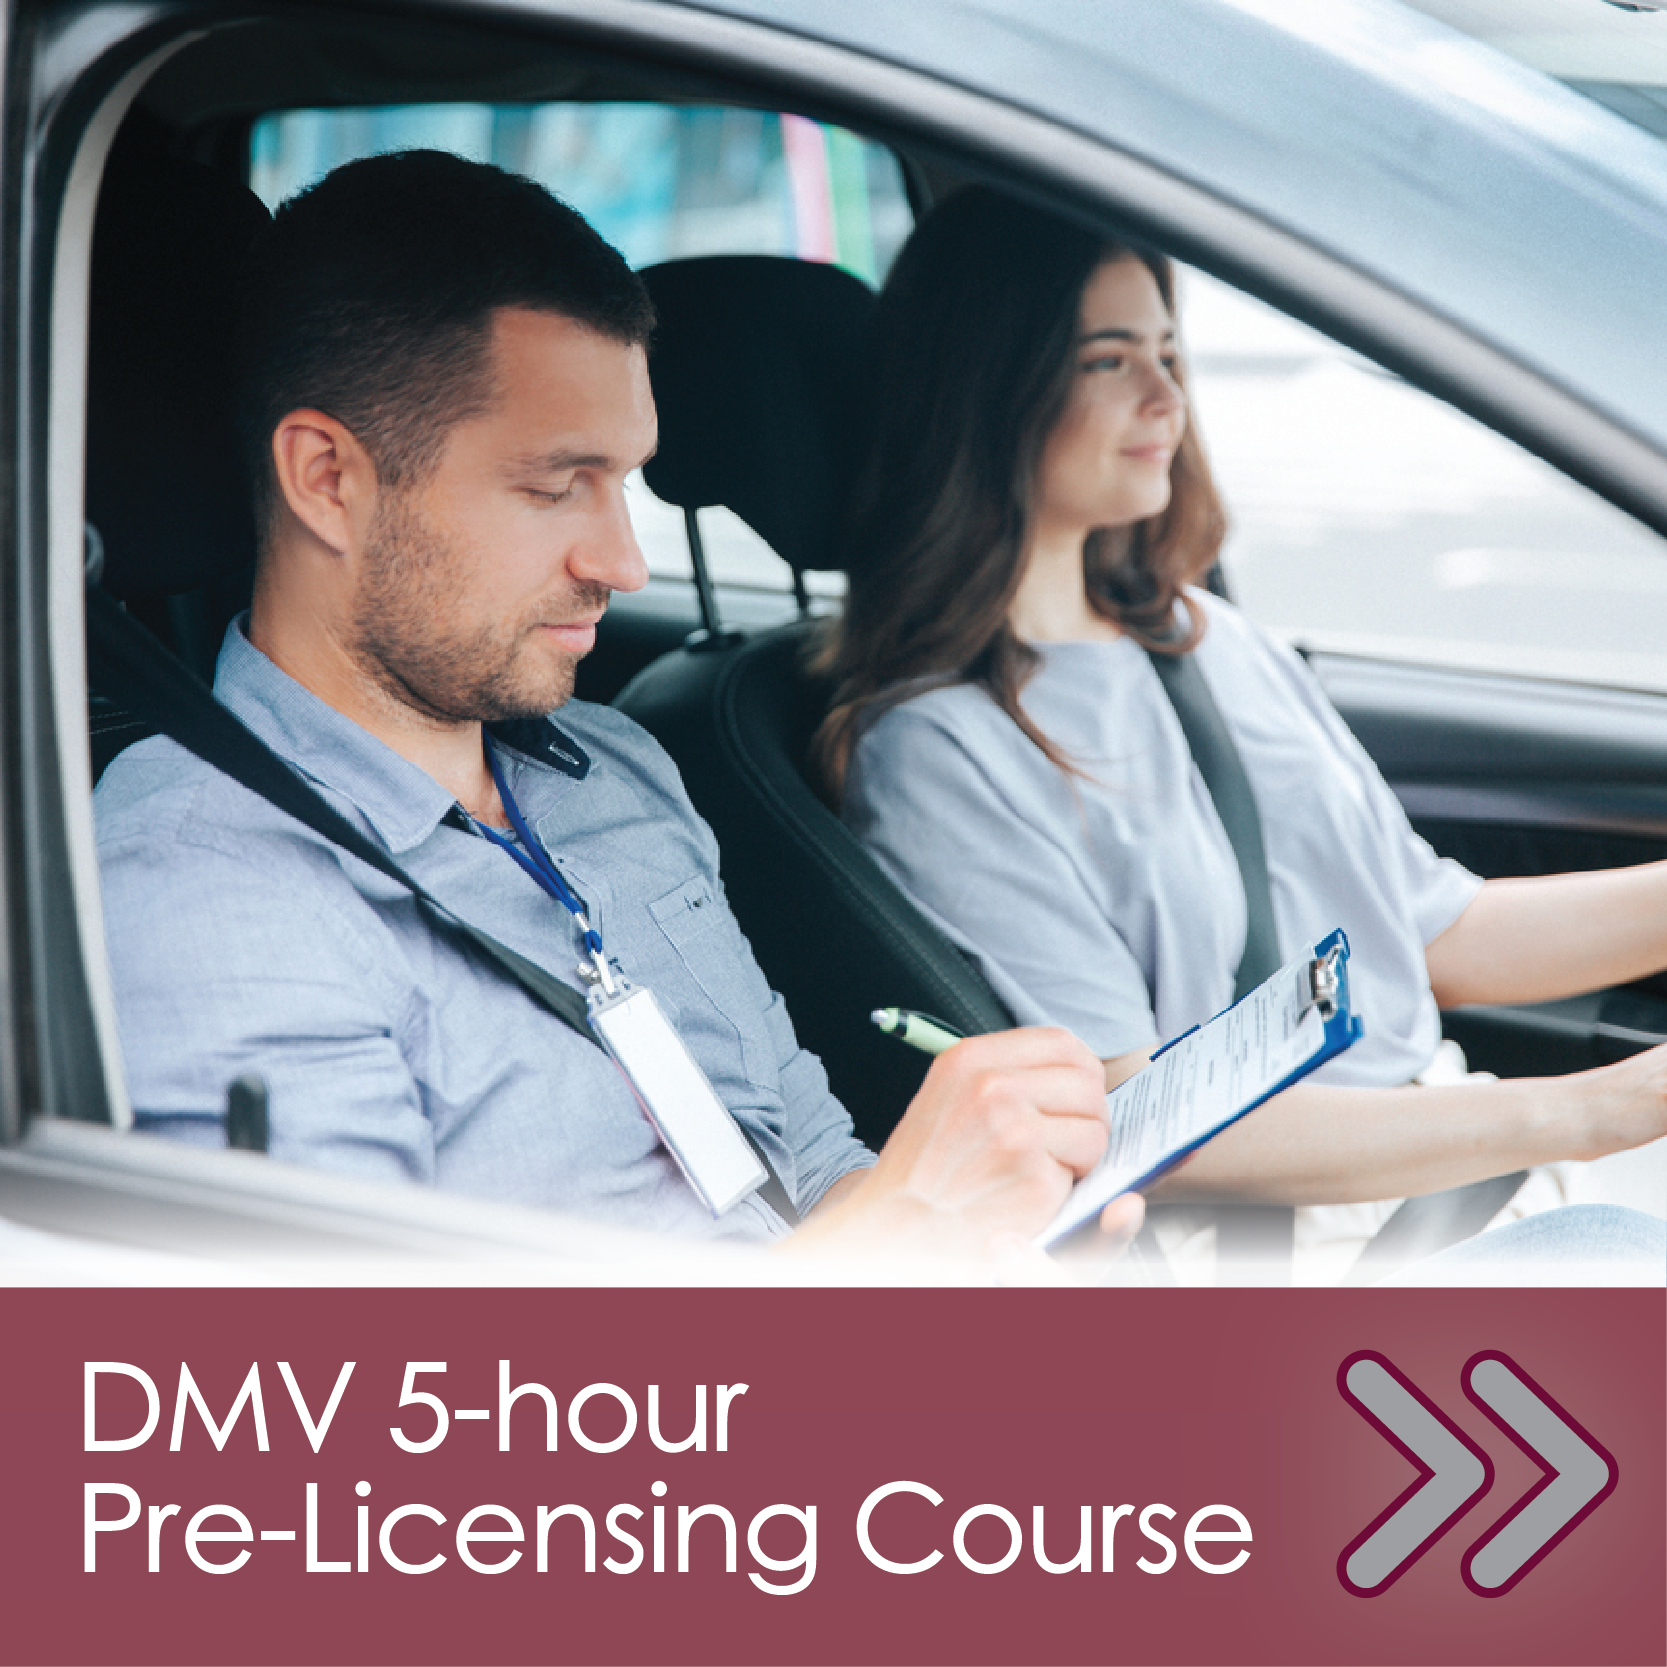 DCMO BOCES DMV 5-hour Pre-Licensing Course